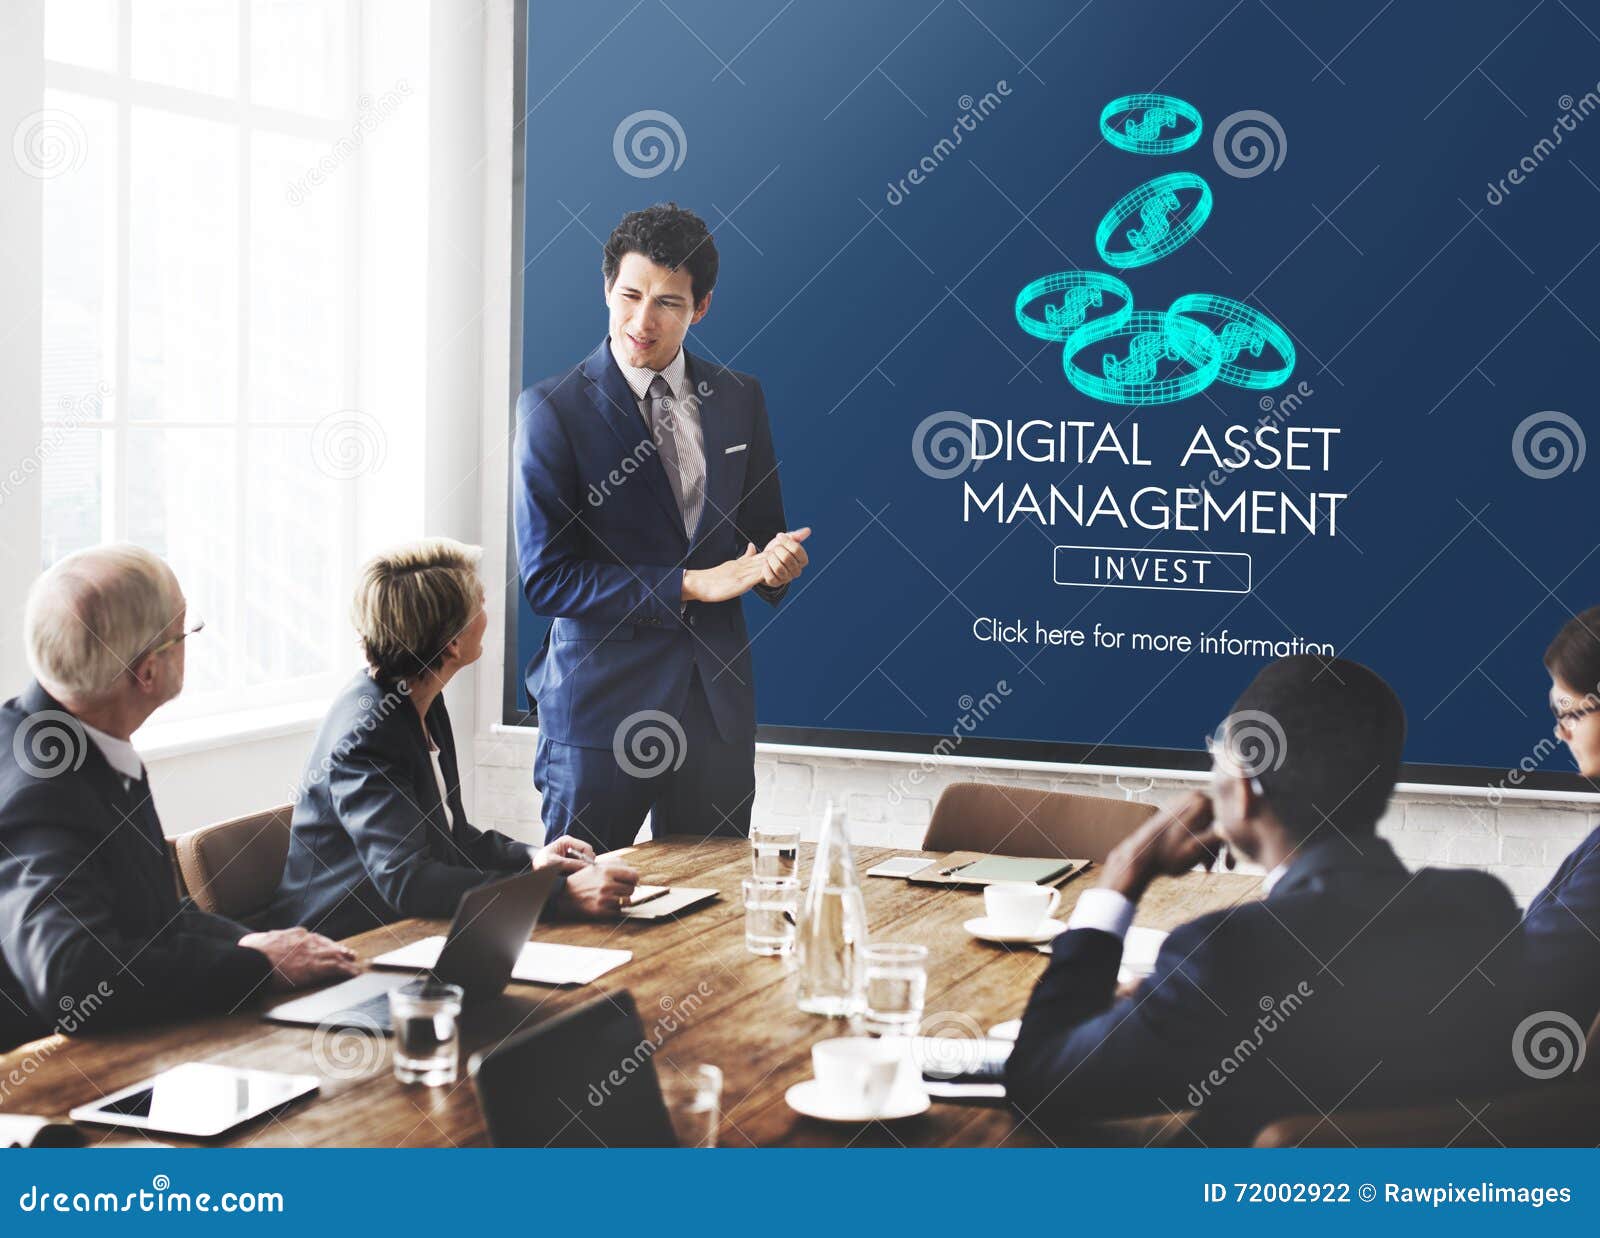 digital asset management data information concept